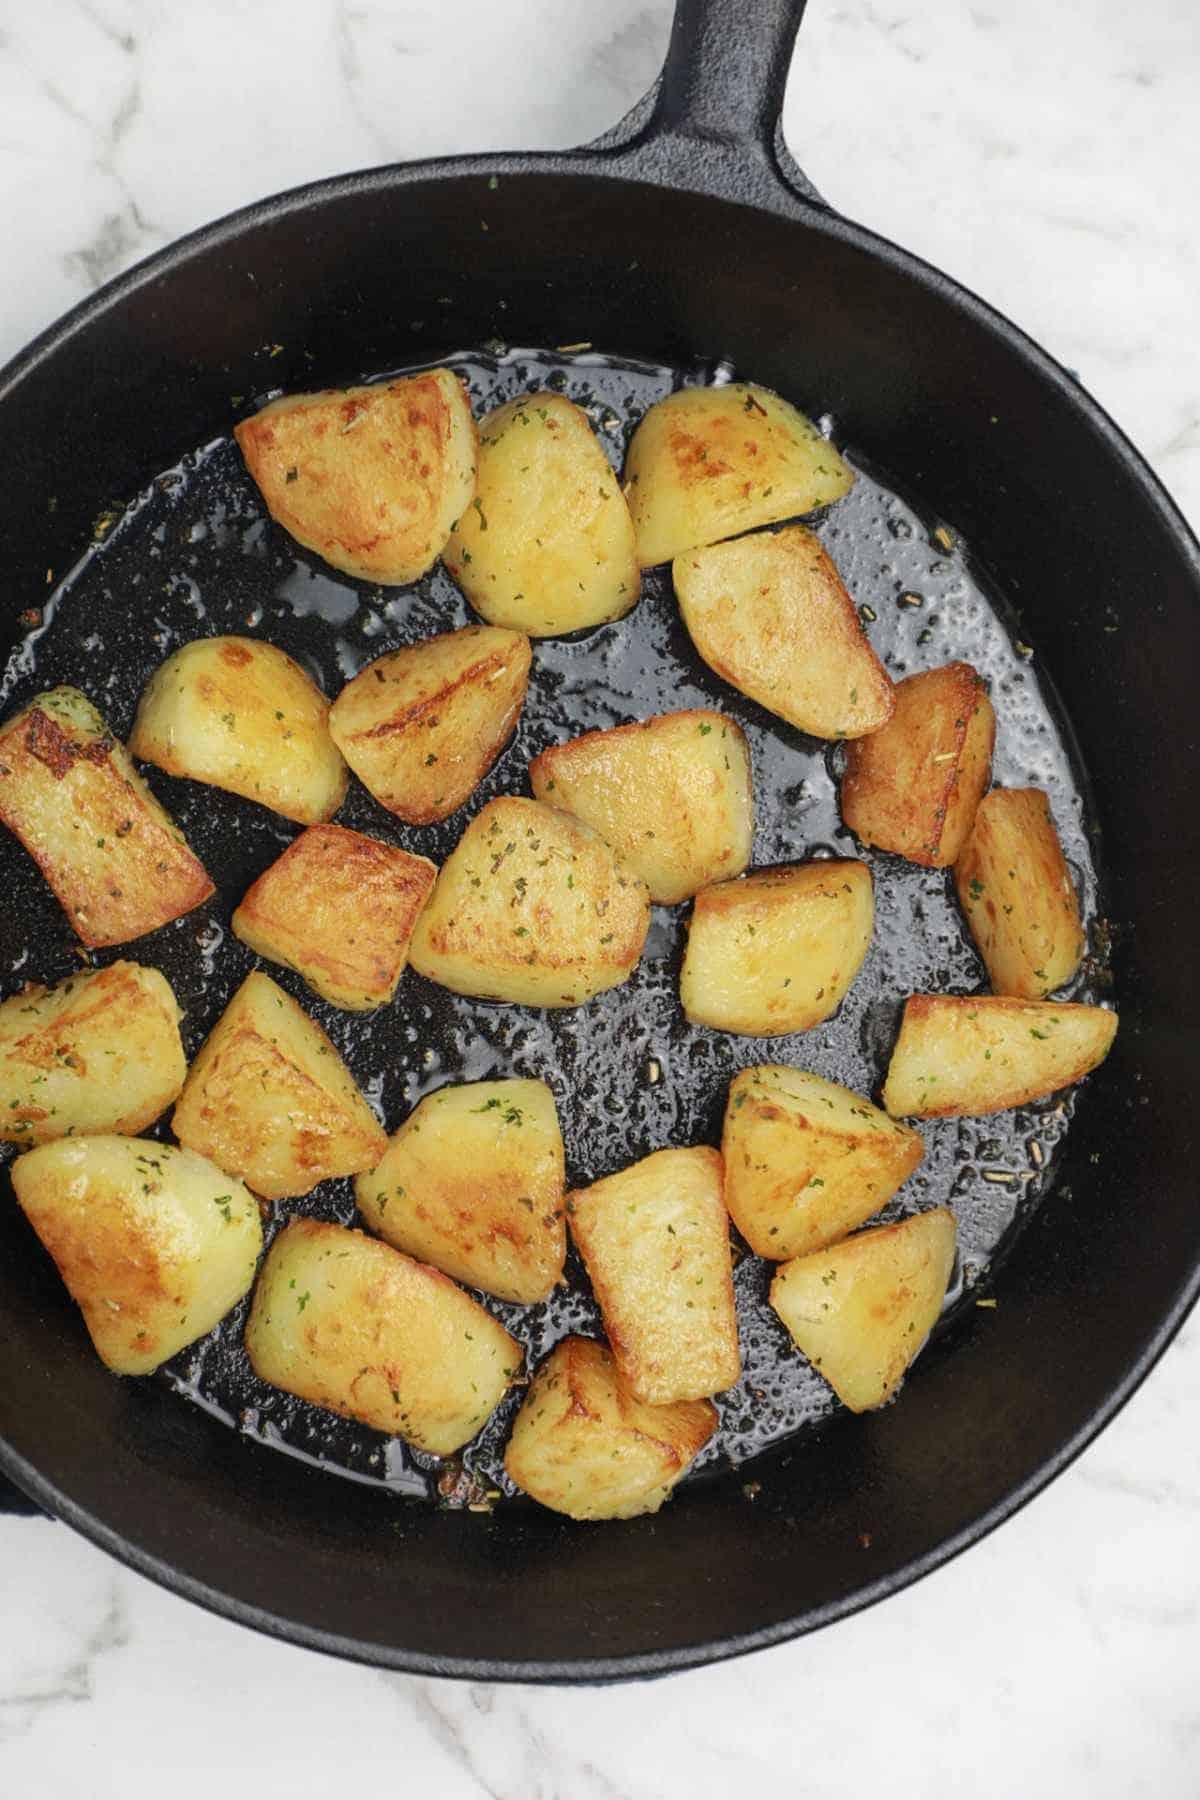 fried potatoes in skillet.